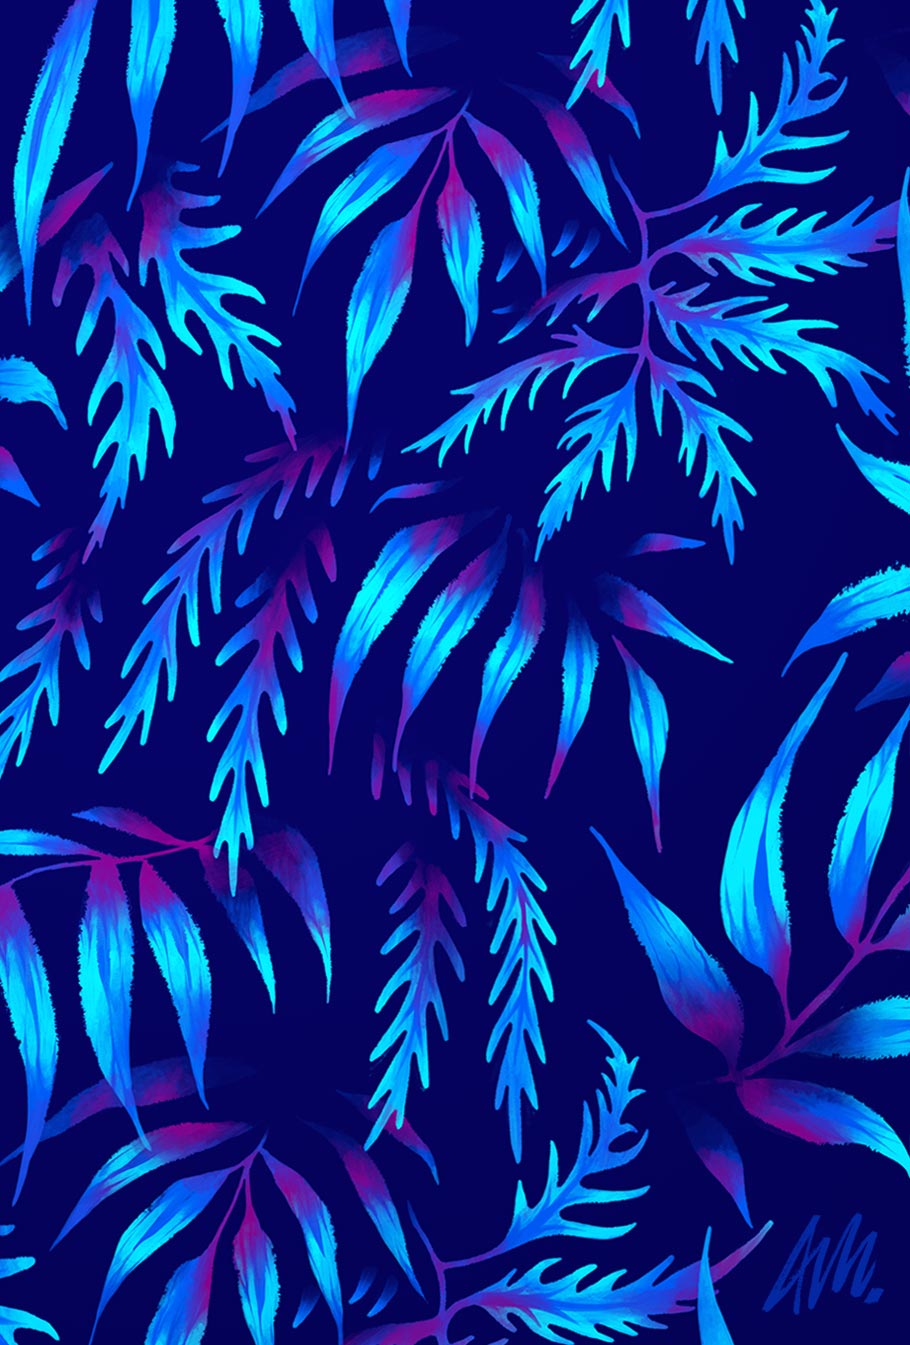 Fern leaf print pattern blue by Andrea Muller